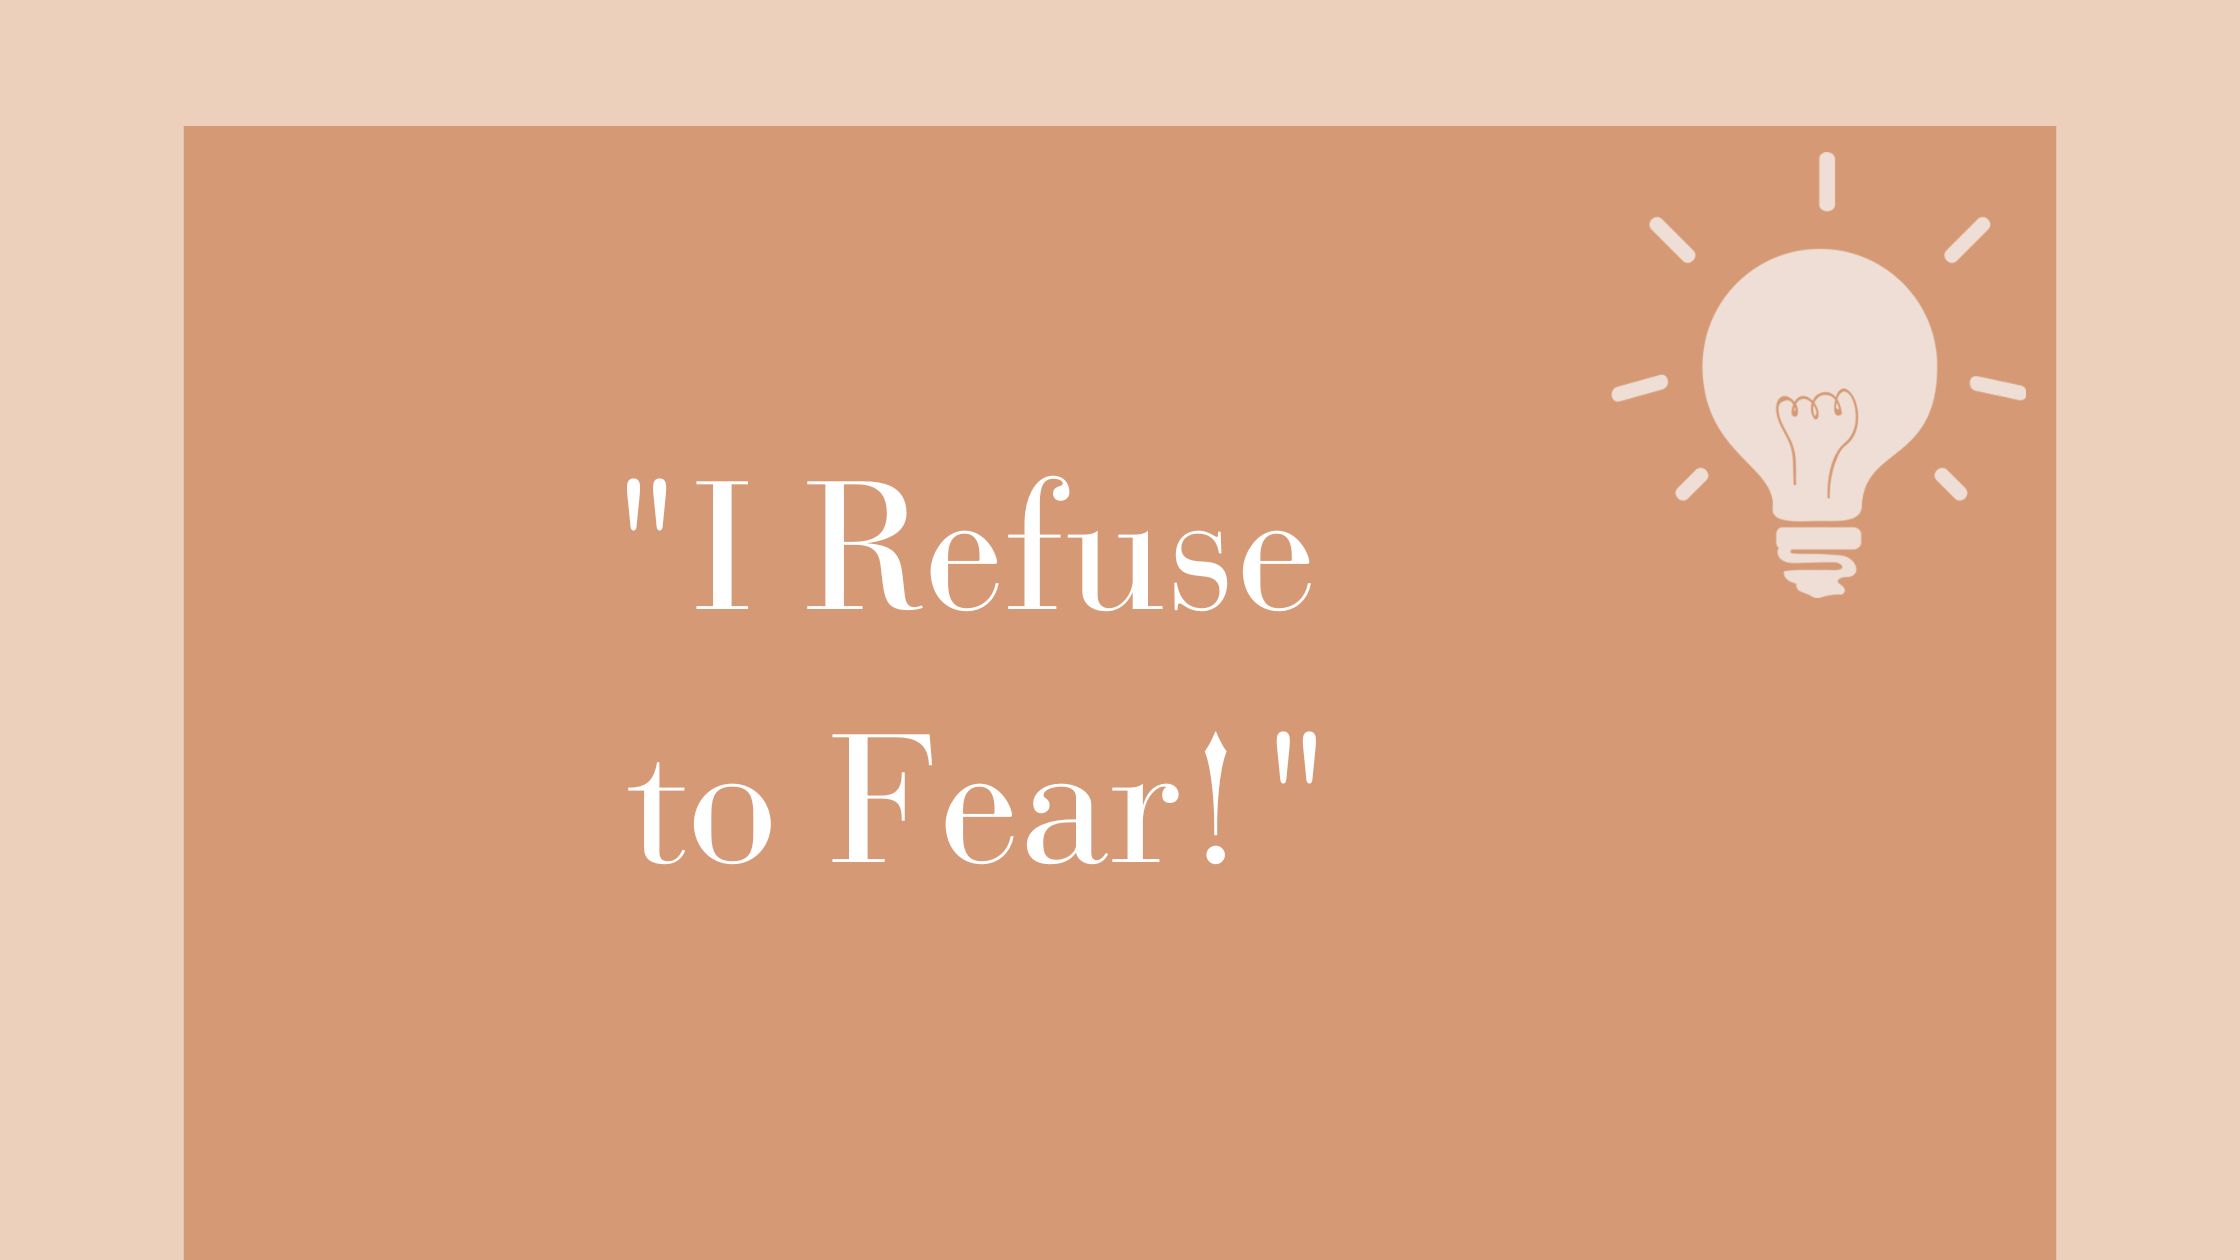 I Refuse to Fear - Testimony